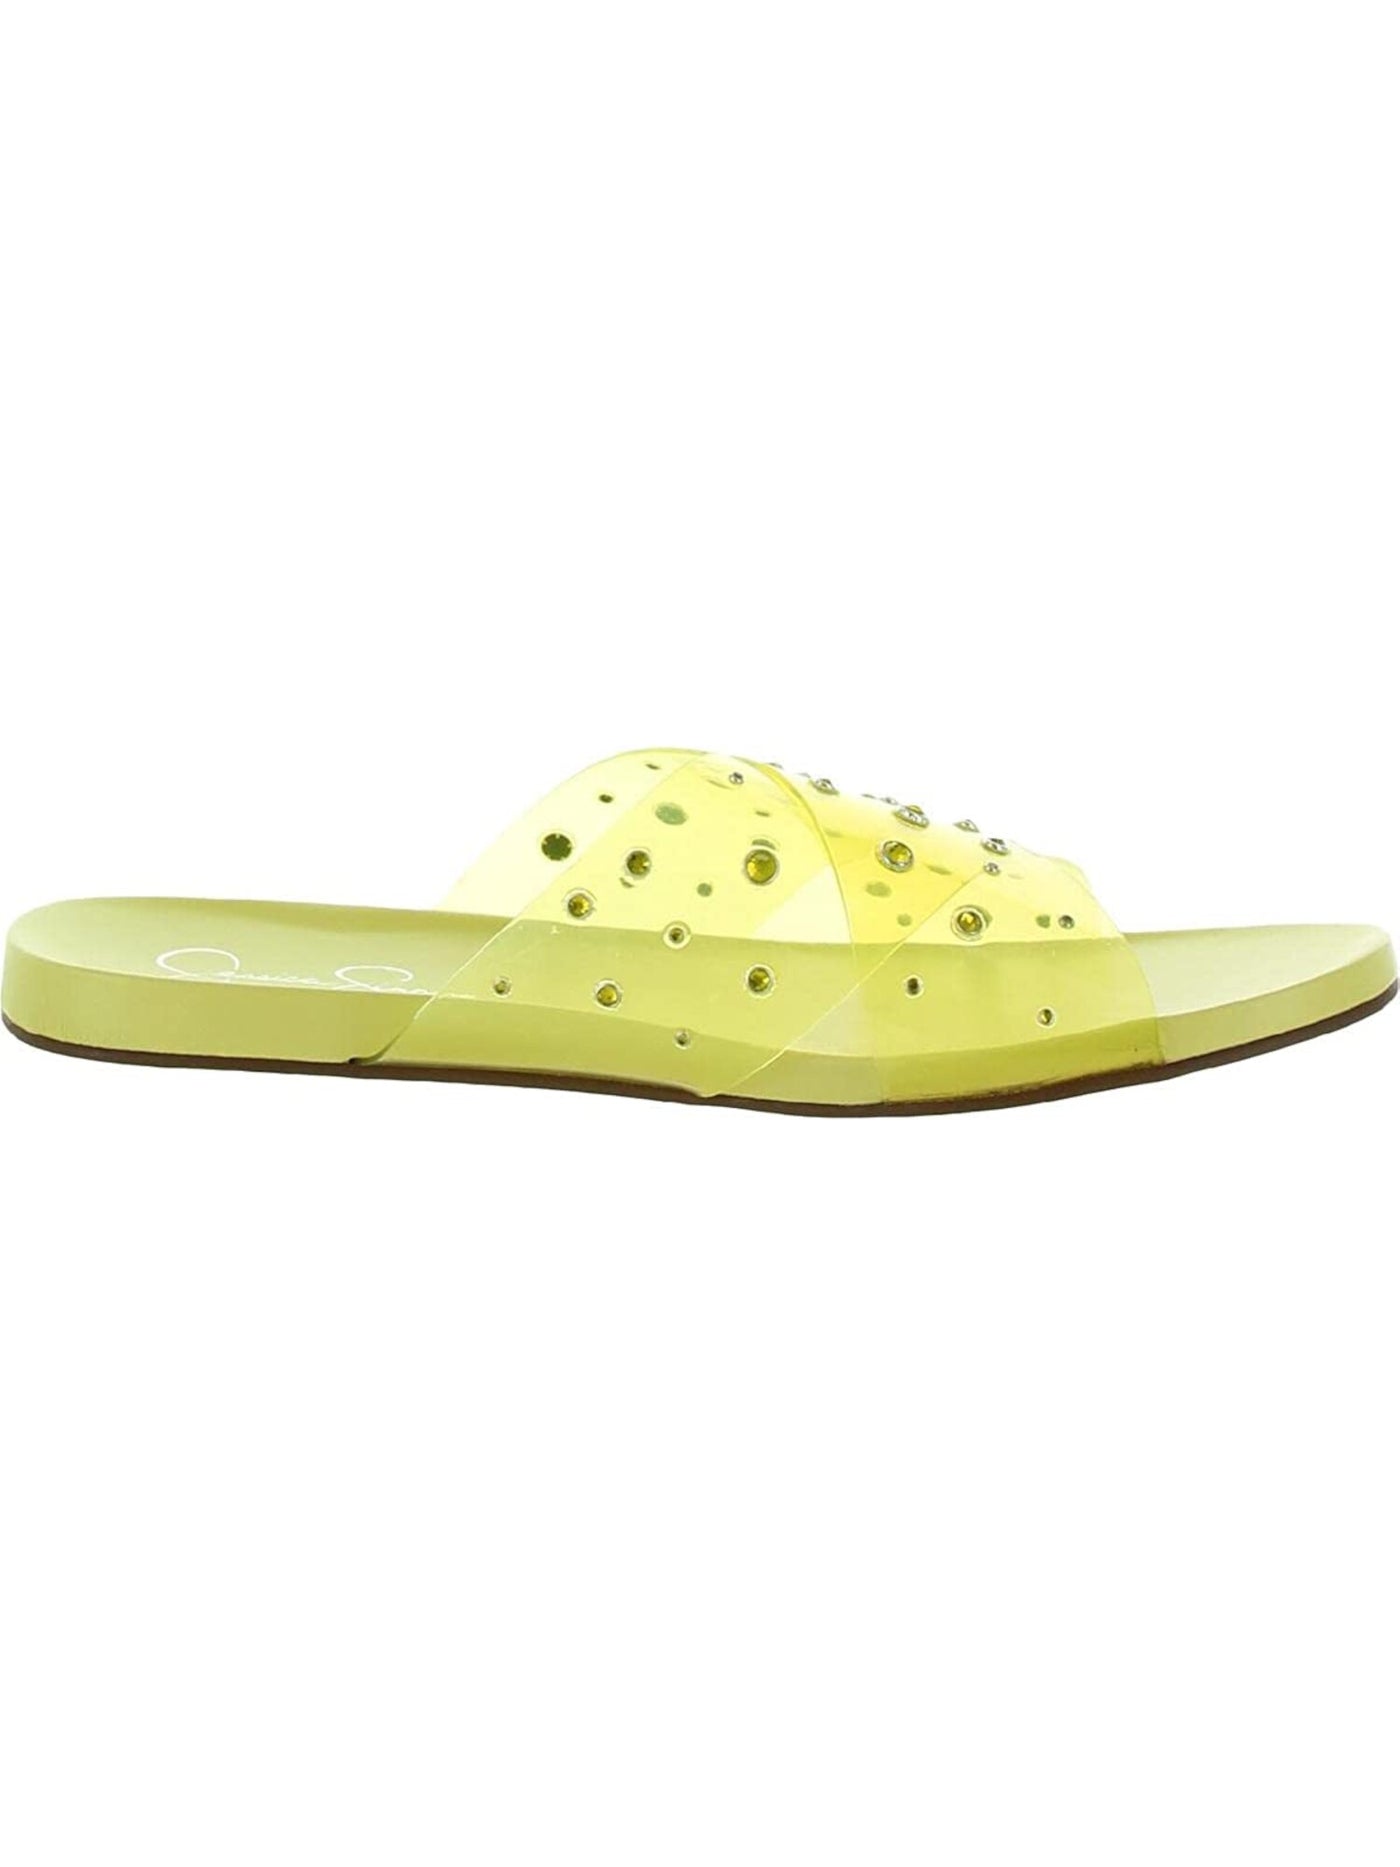 JESSICA SIMPSON Womens Yellow Lucite Straps Rhinestone Teslie Round Toe Slip On Slide Sandals Shoes 8 M